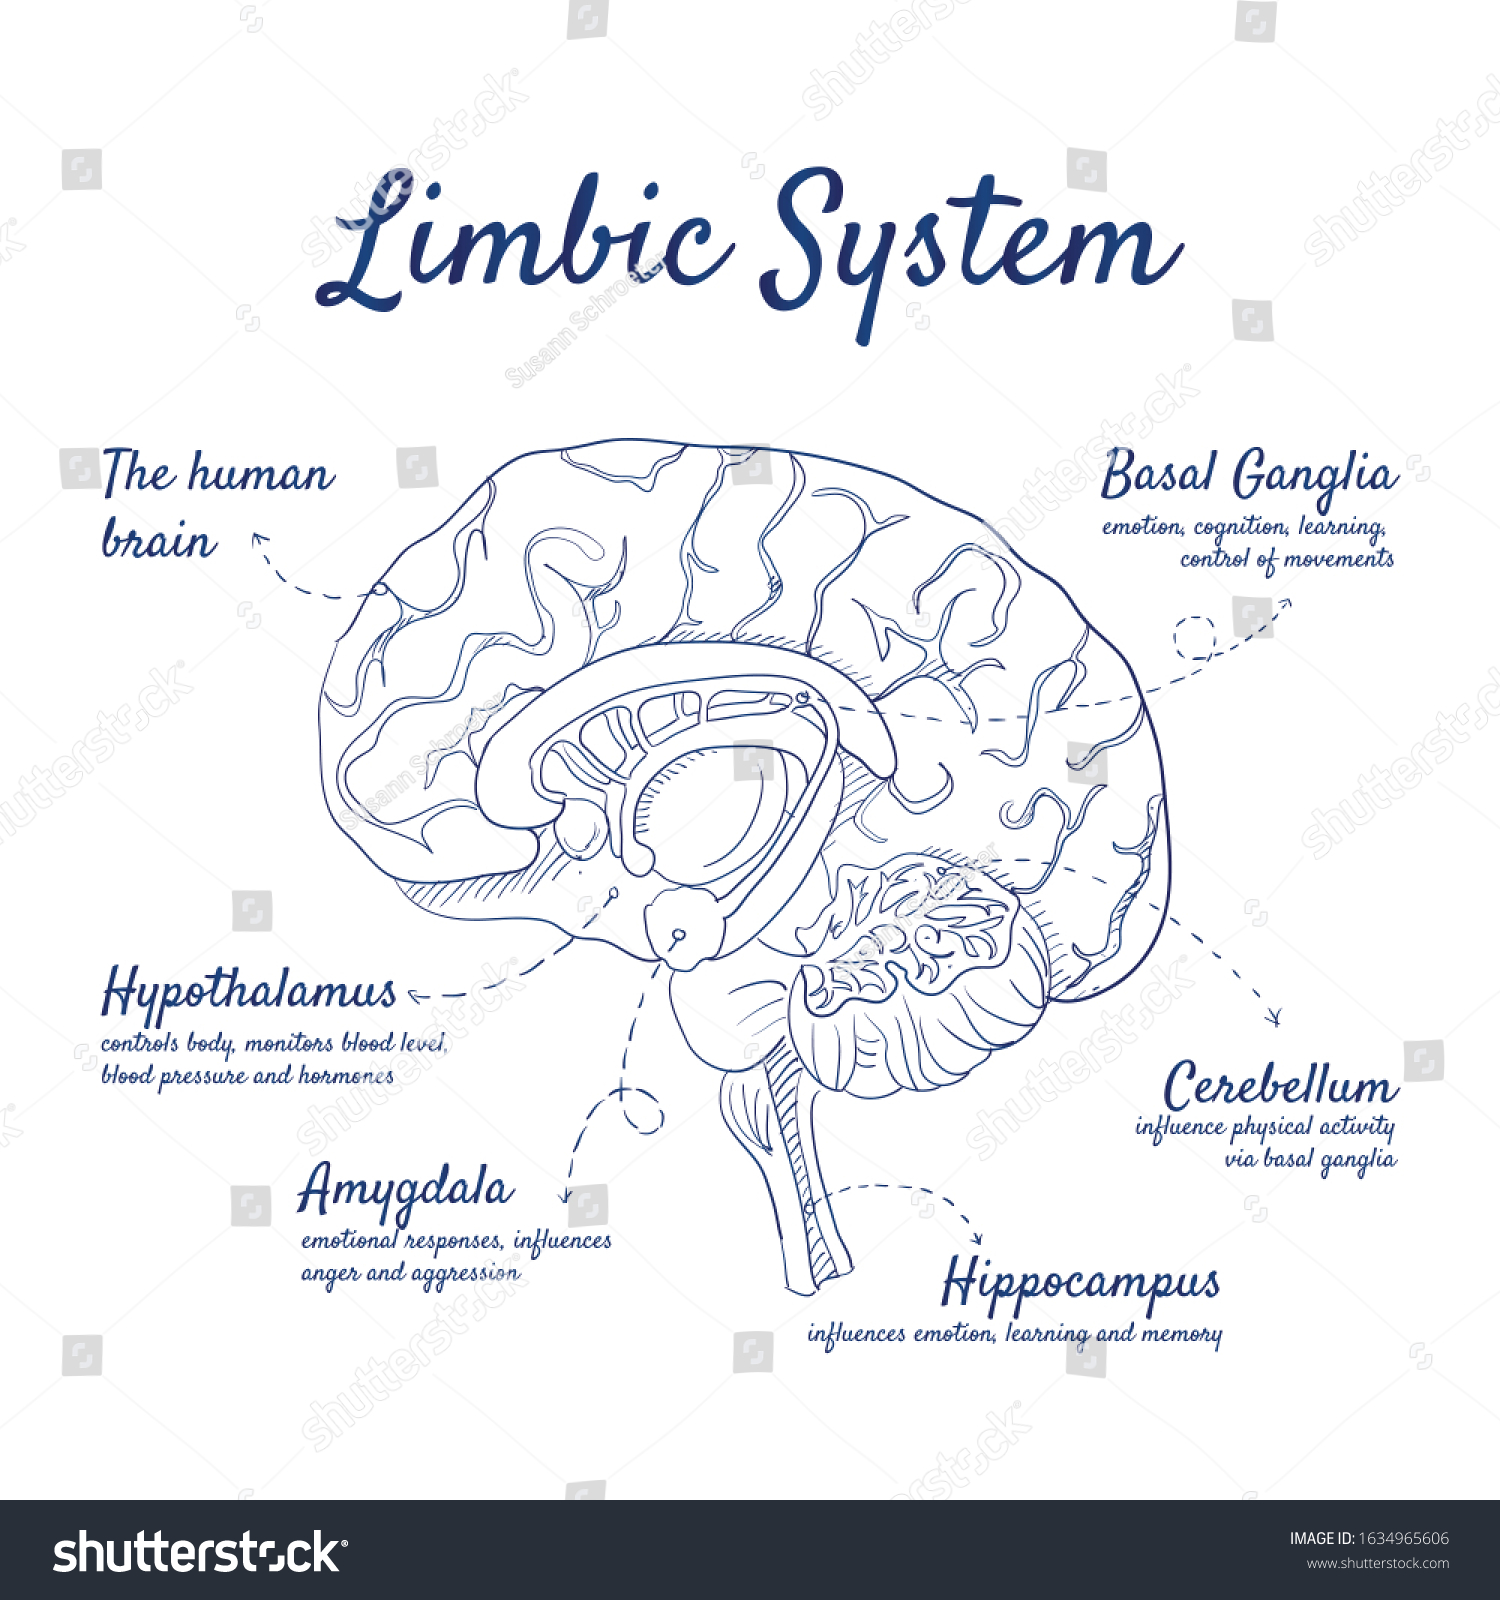 SVG of Doodle set of Limbic System – human brain, Basal Ganglia, Cerebellum, Hippocampus, Amygdala, Hypothalamus, hand-drawn. Vector sketch illustration isolated over white background. svg